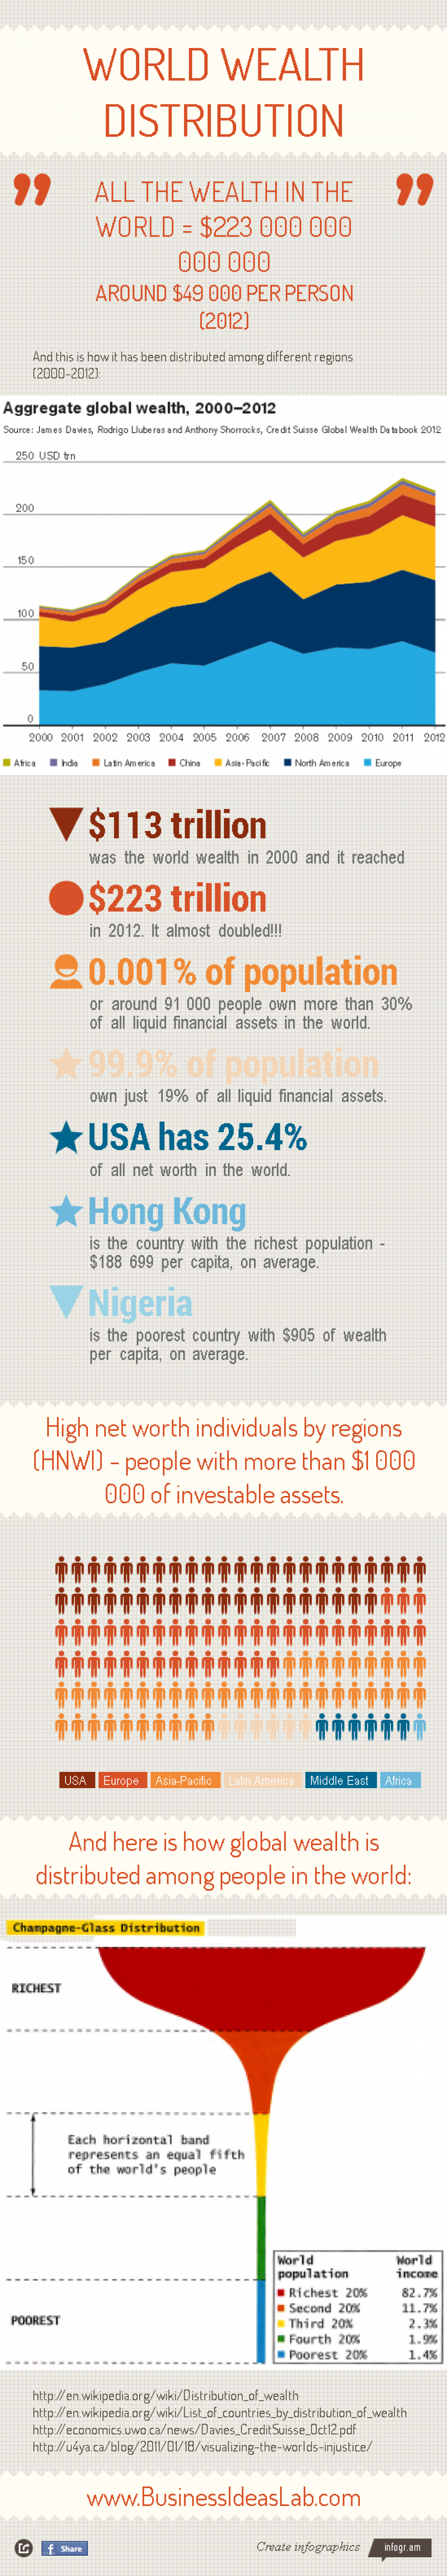 Global Wealth Distribution Infographic